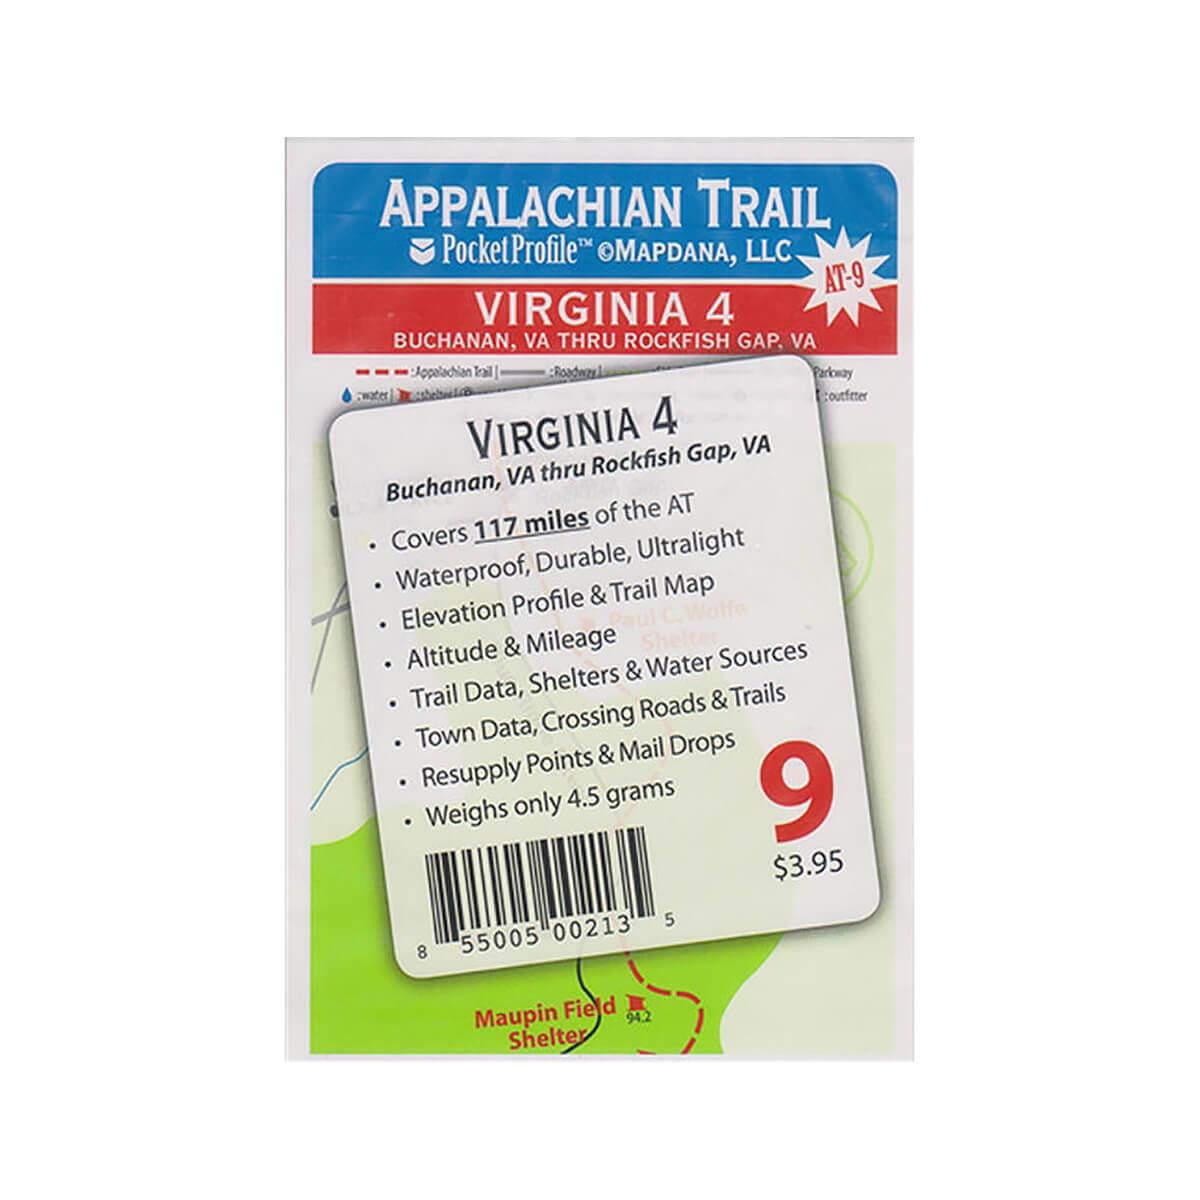  Pearisburg Va To Buchanan Va Appalachian Trail Elevation Pocket Profile Map